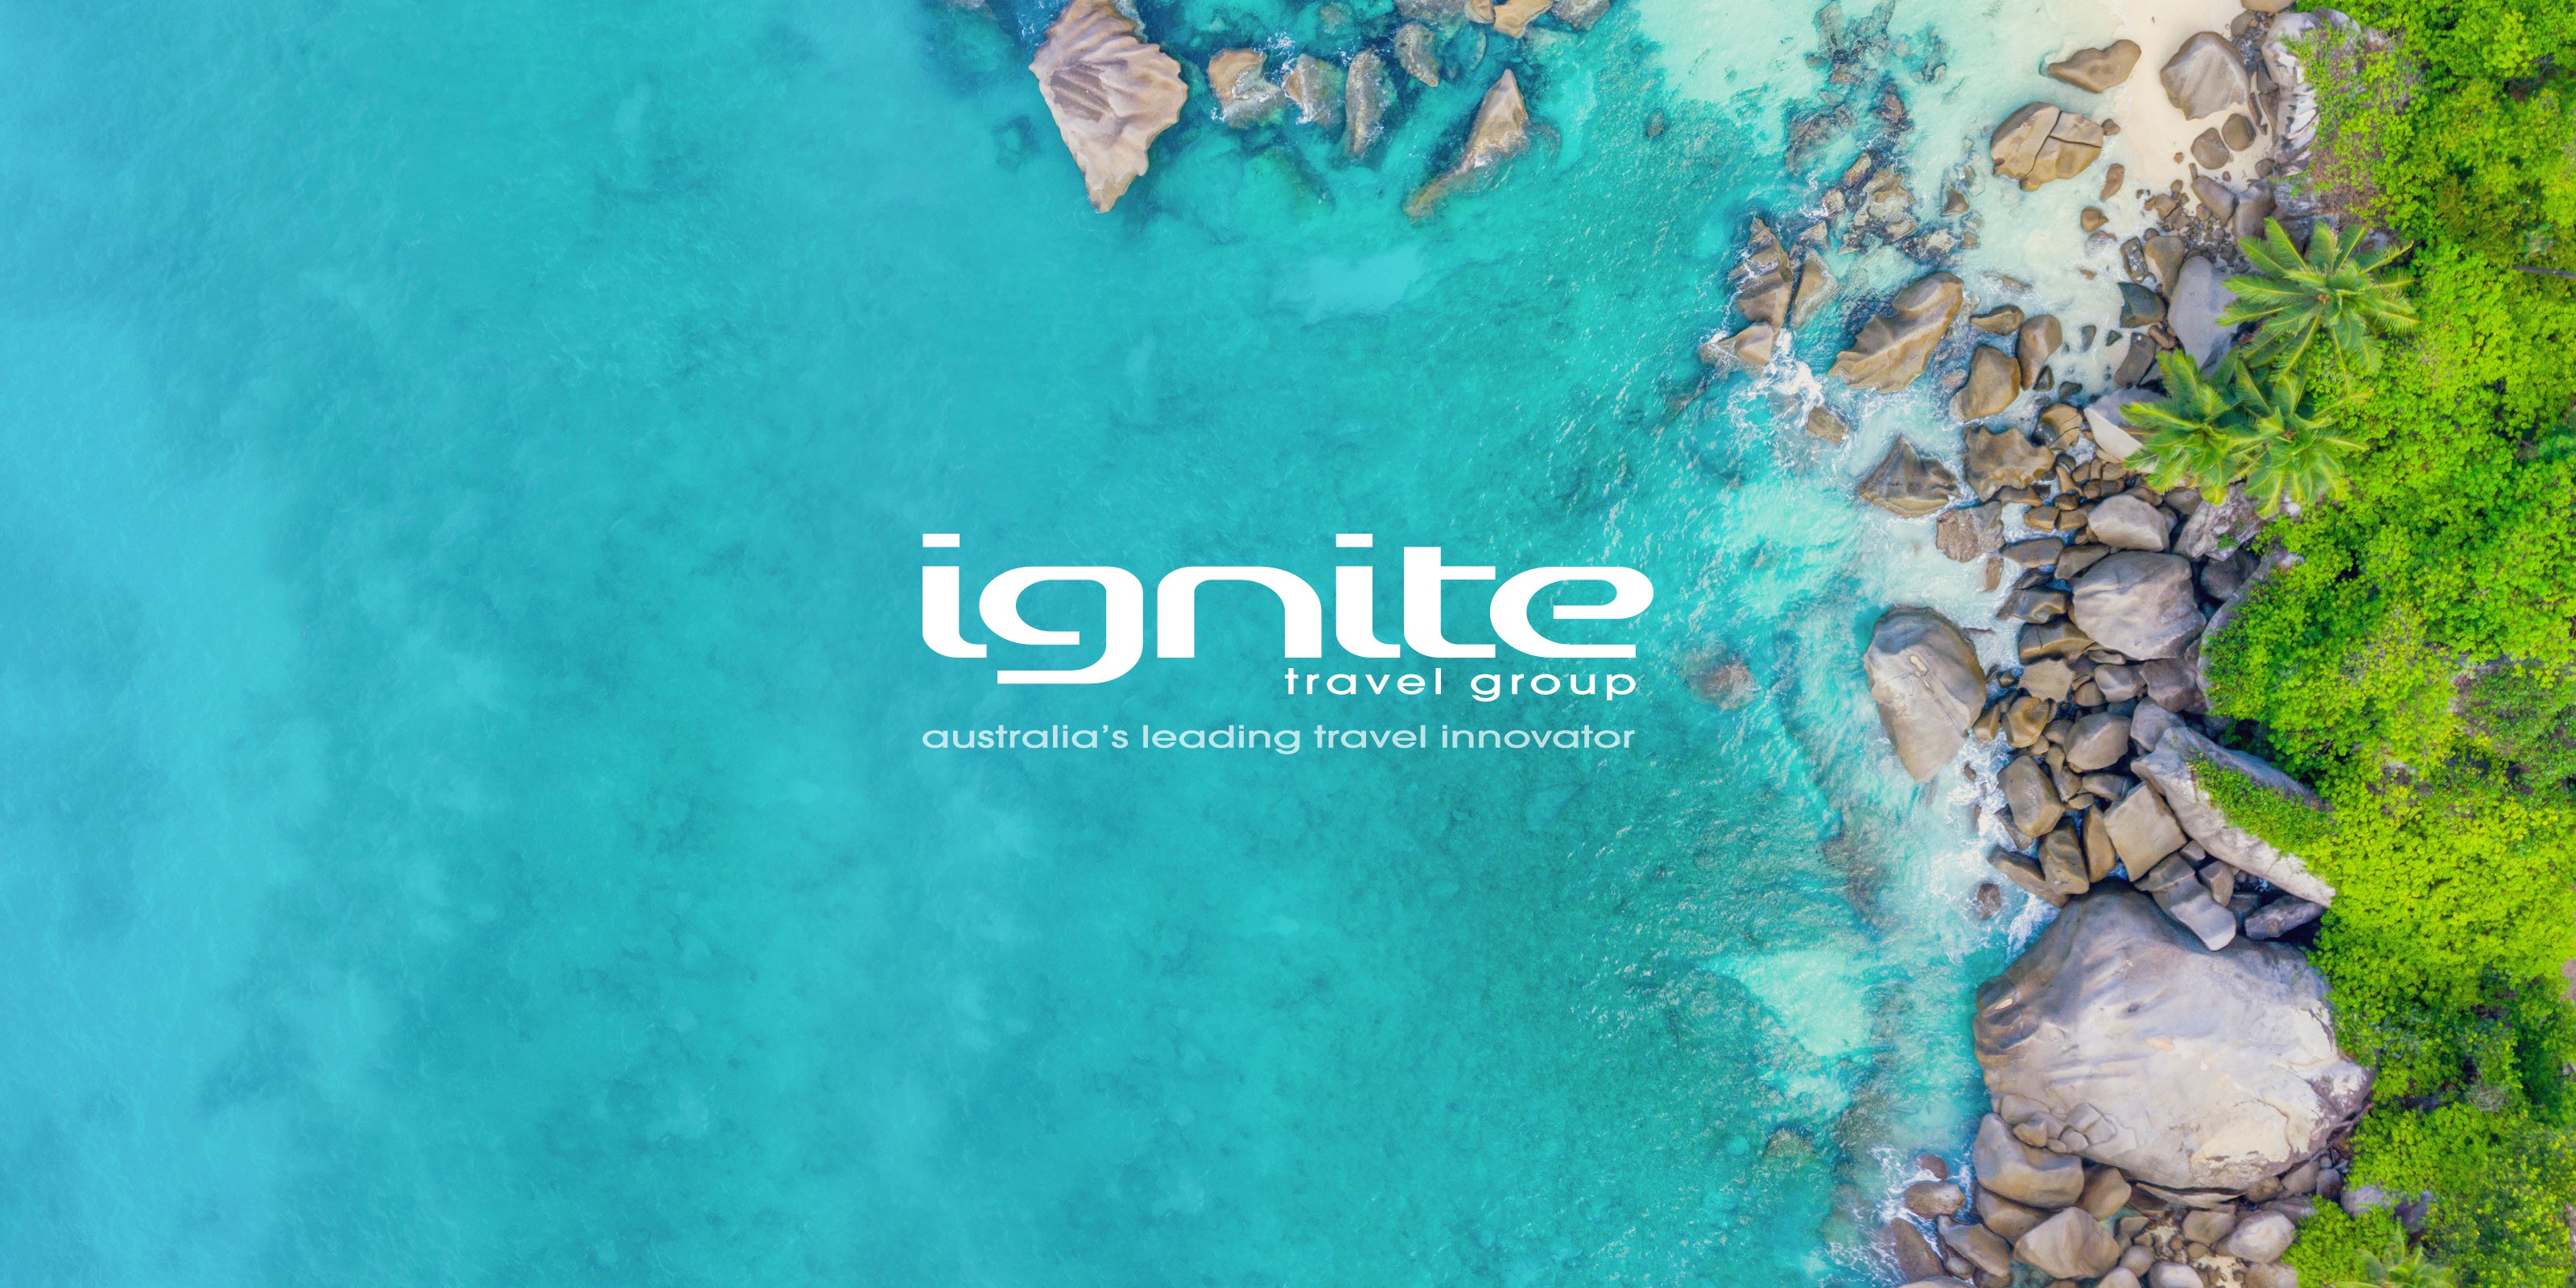 ignite travel group logo